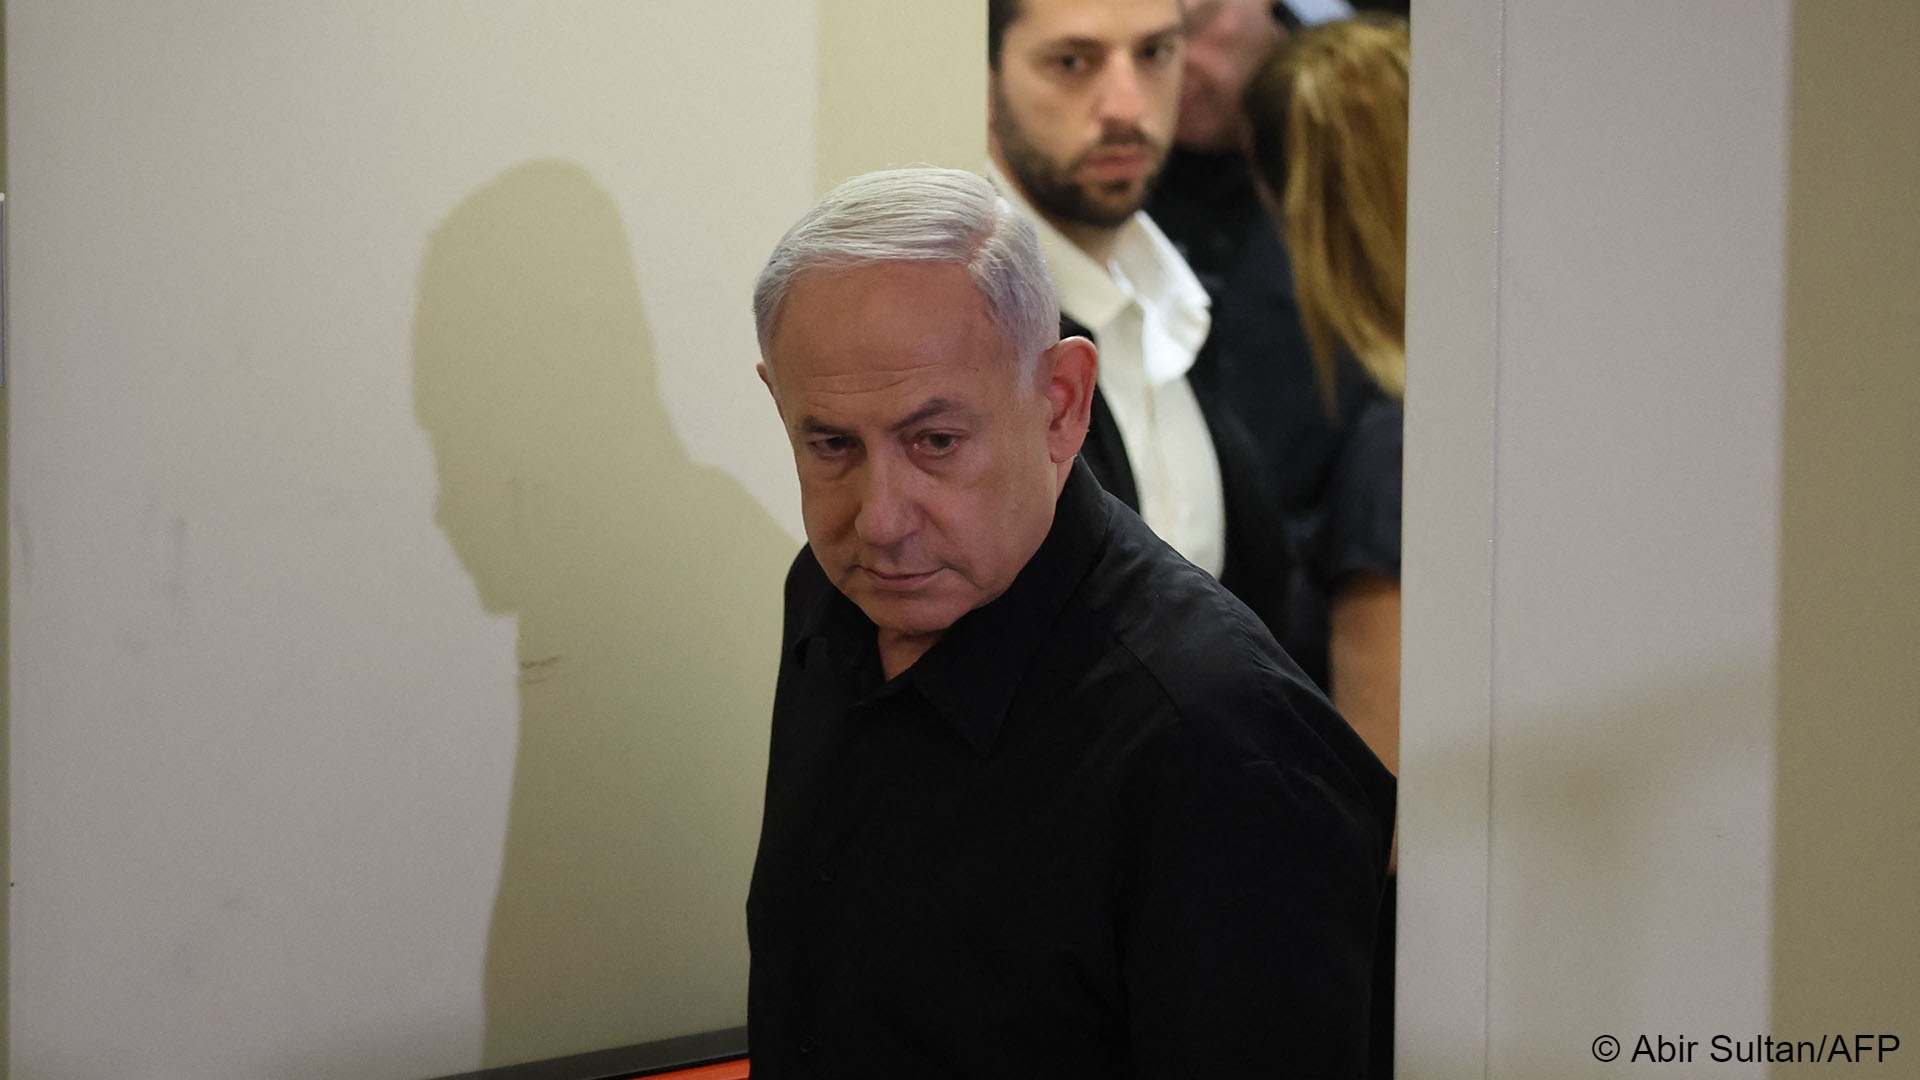 Israel's Prime Minister Benjamin Netanyahu enters a room in a black shirt